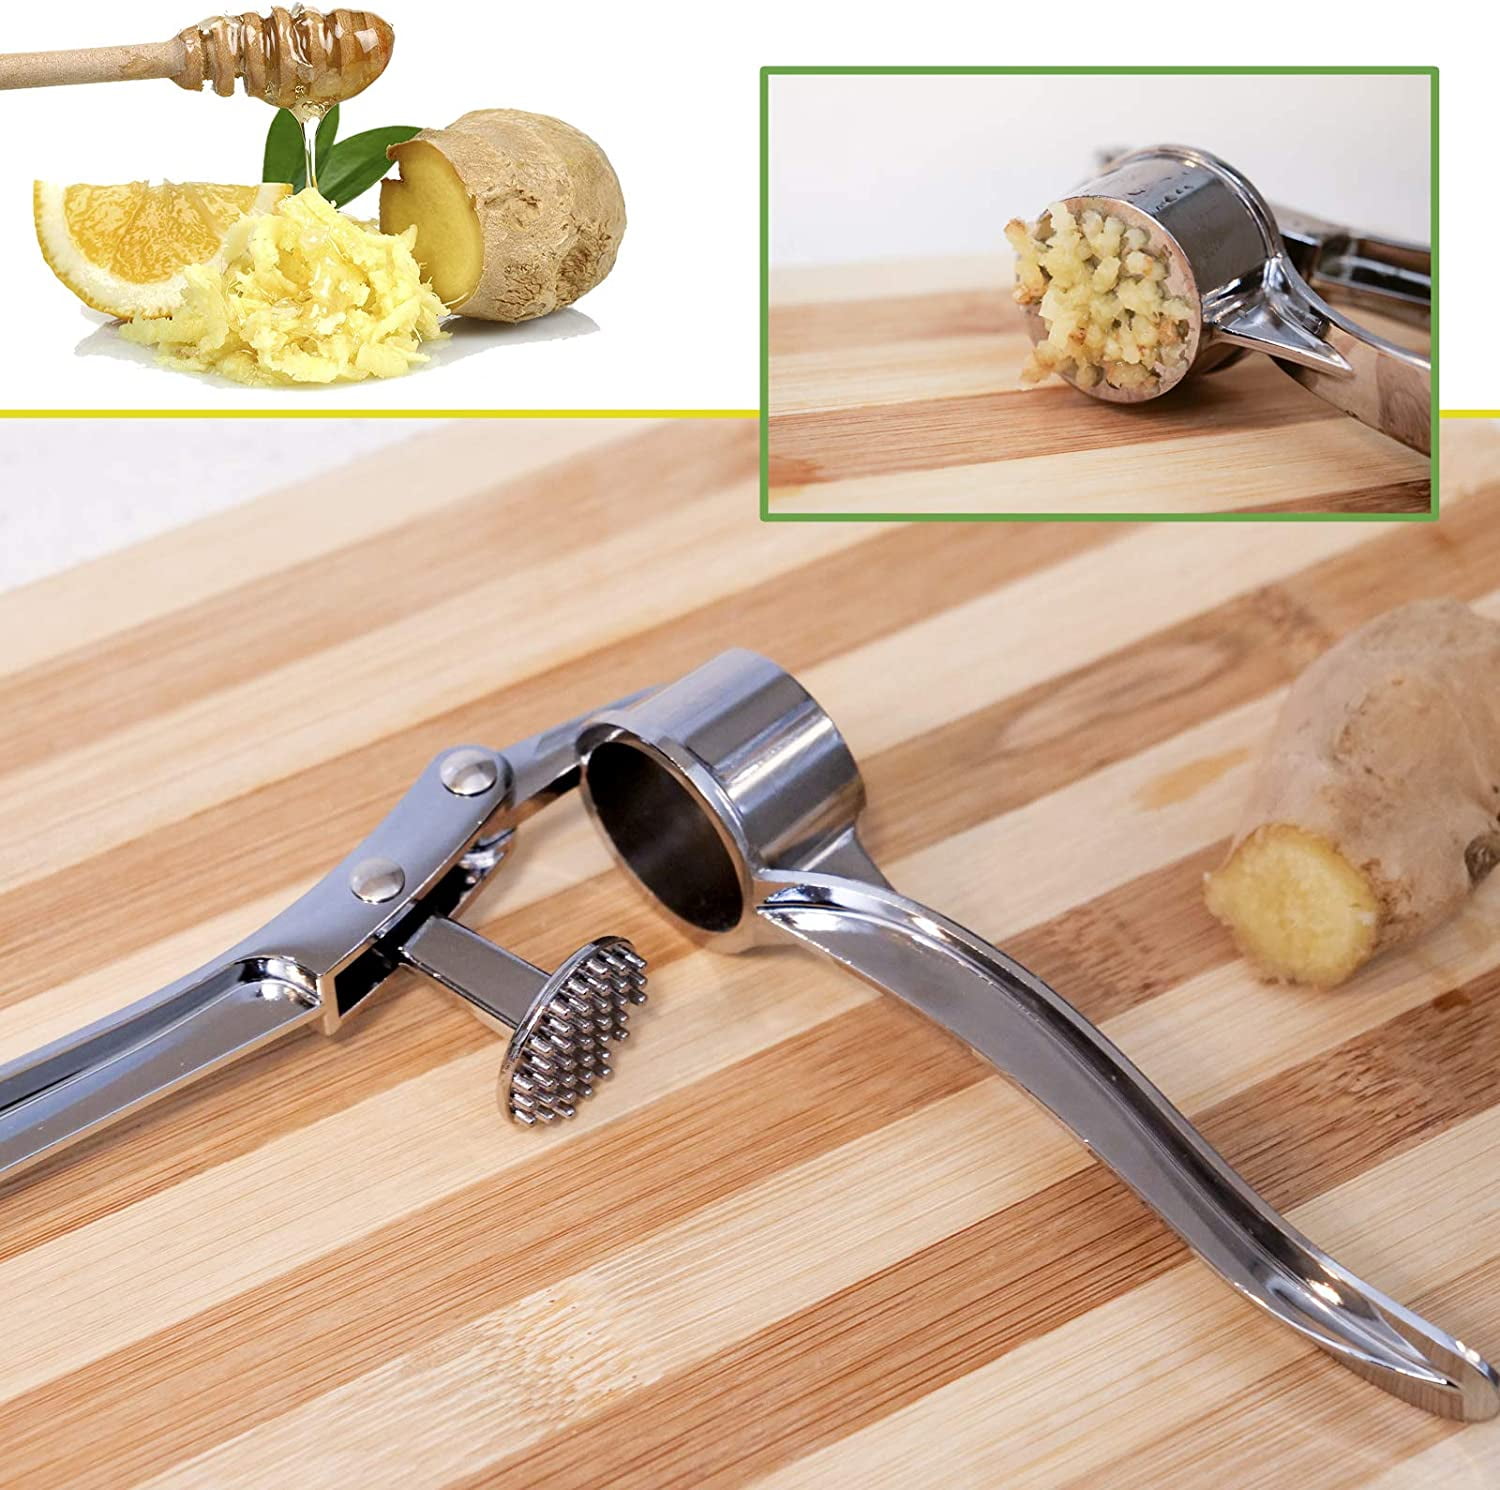  GUAGLL Stainless Steel Garlic Press Garlic Press Kitchen Garlic  Tool Multi-function Portable Manual Garlic Press: Home & Kitchen